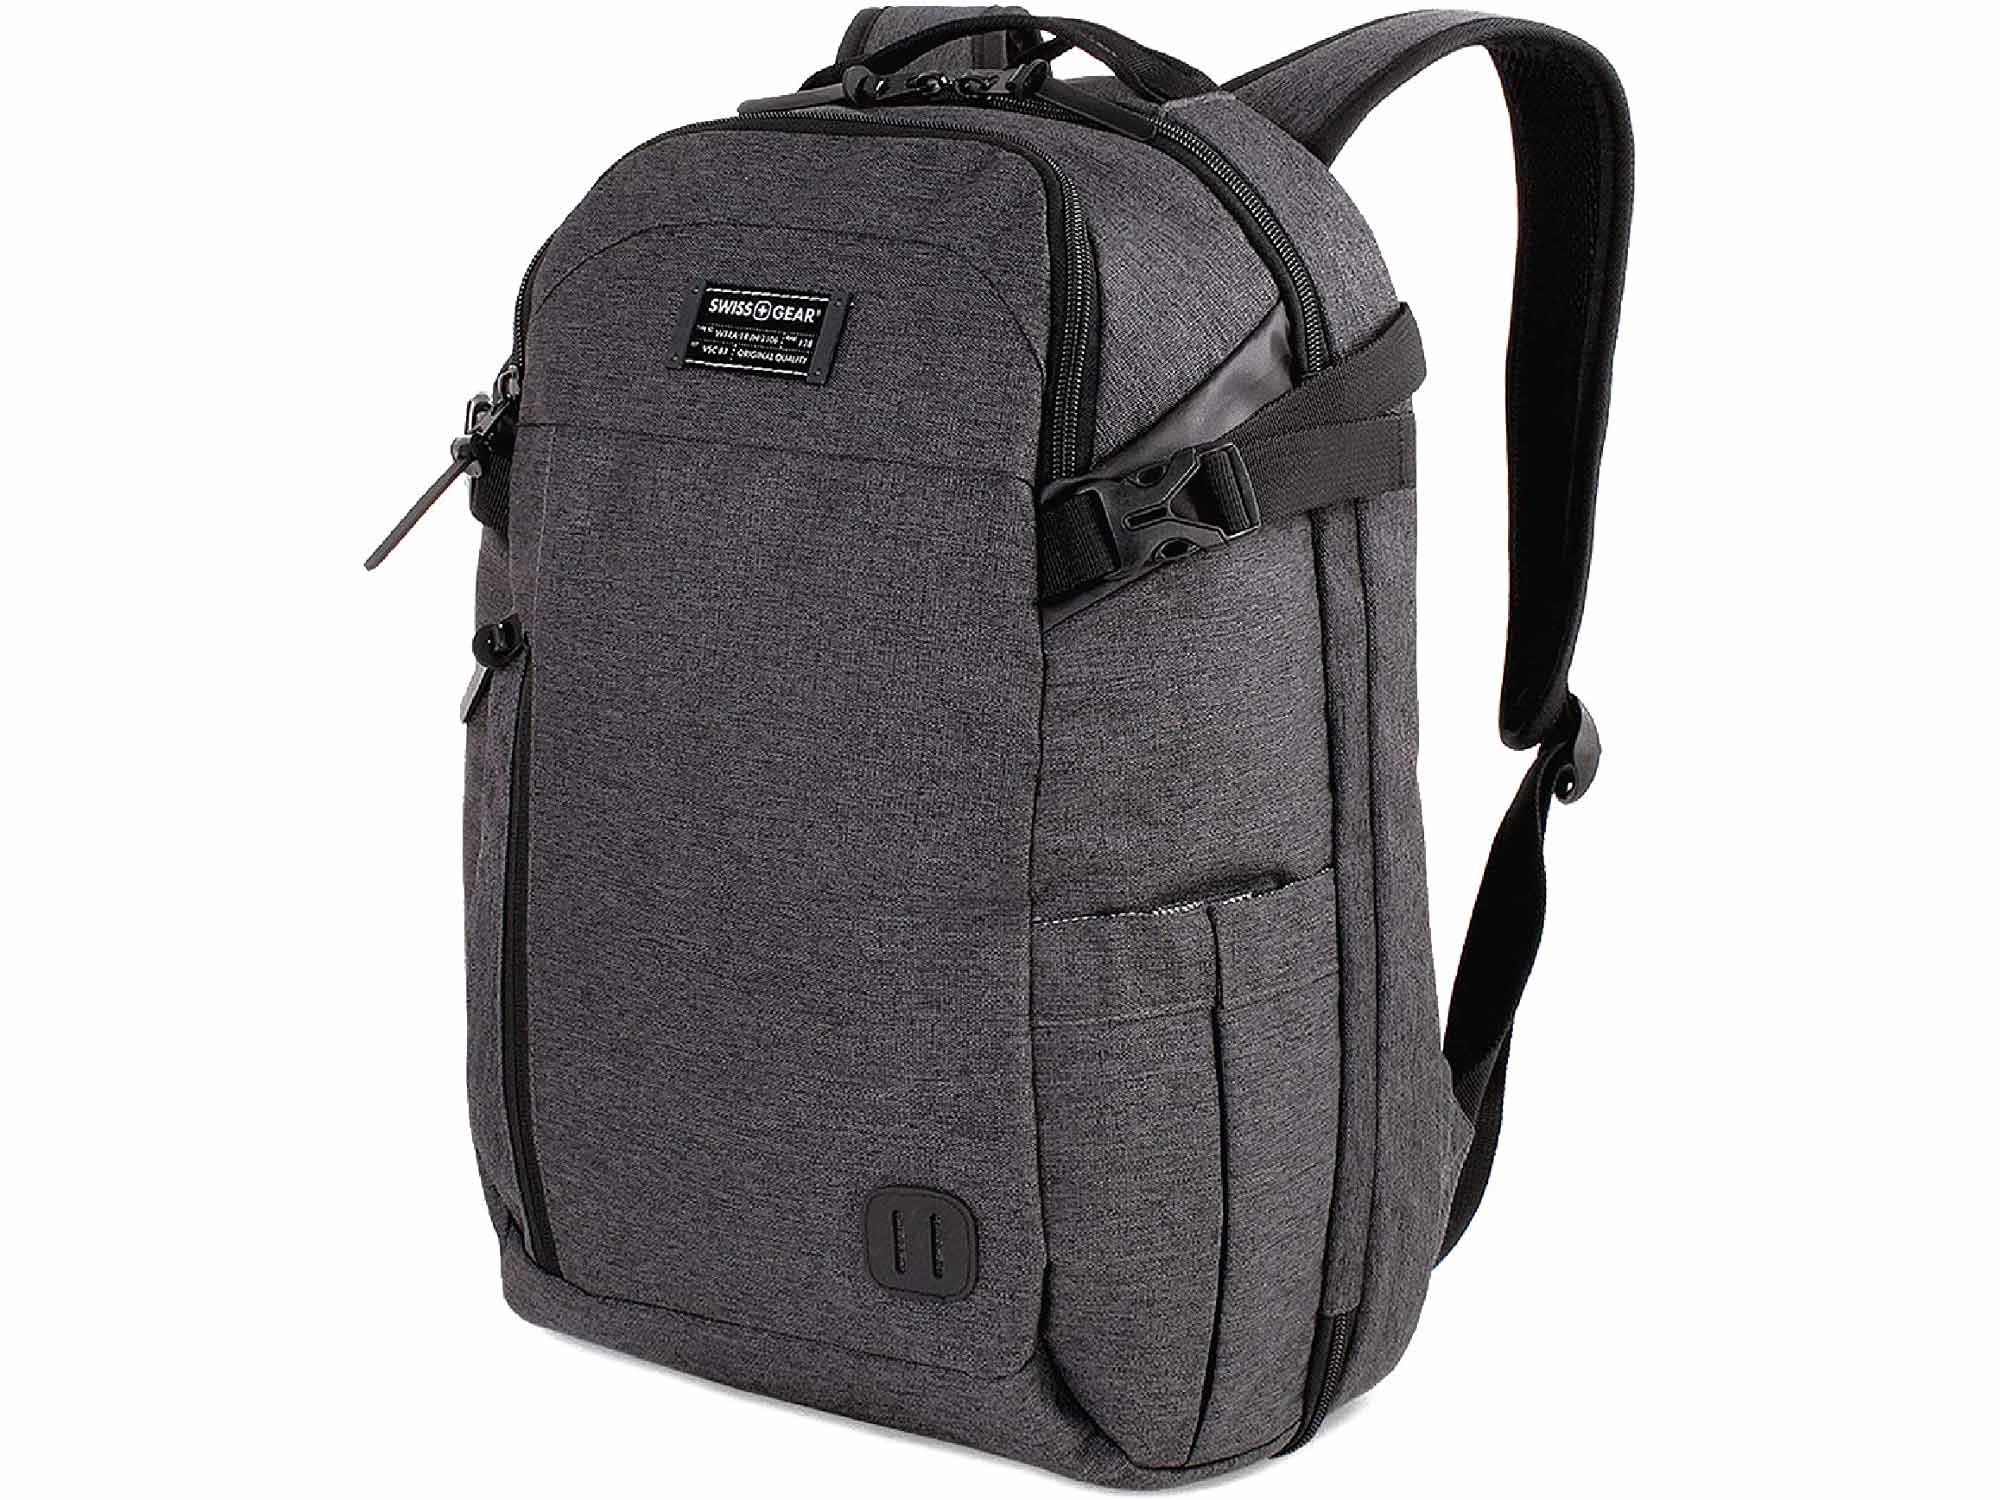 SwissGear Getaway Collection Laptop Backpack